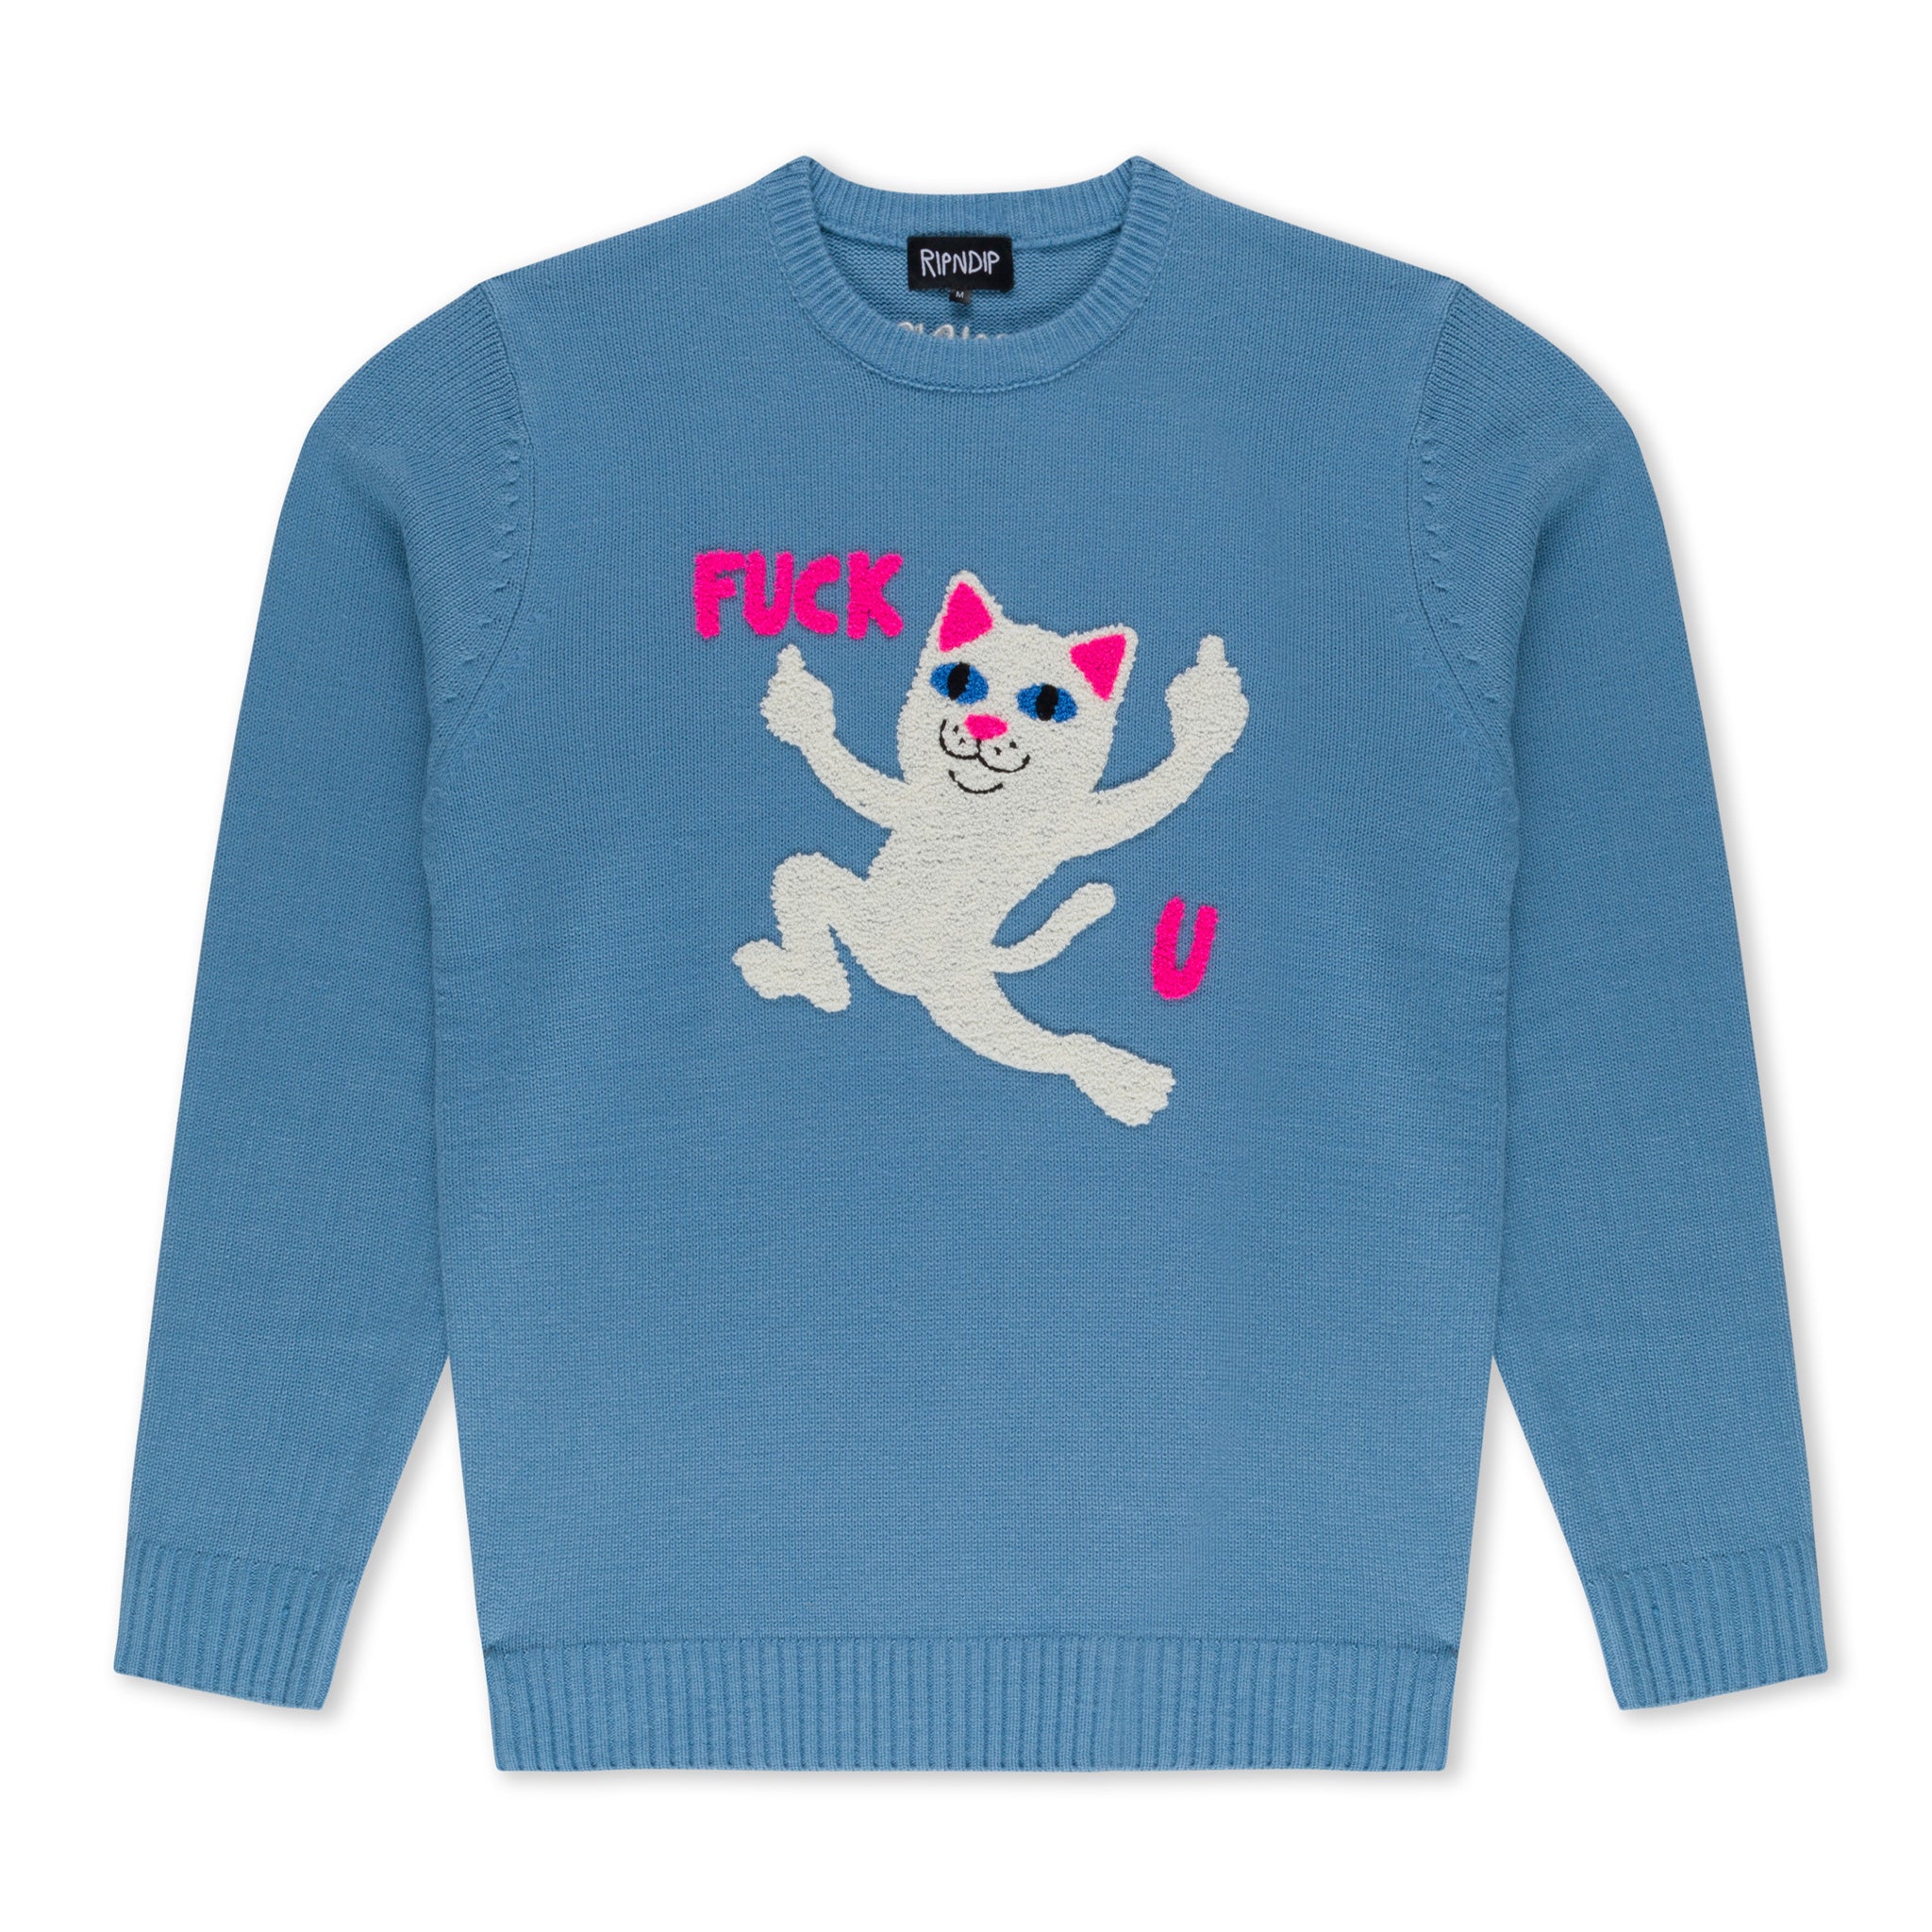 F U Knit Sweater (Periwinkle)